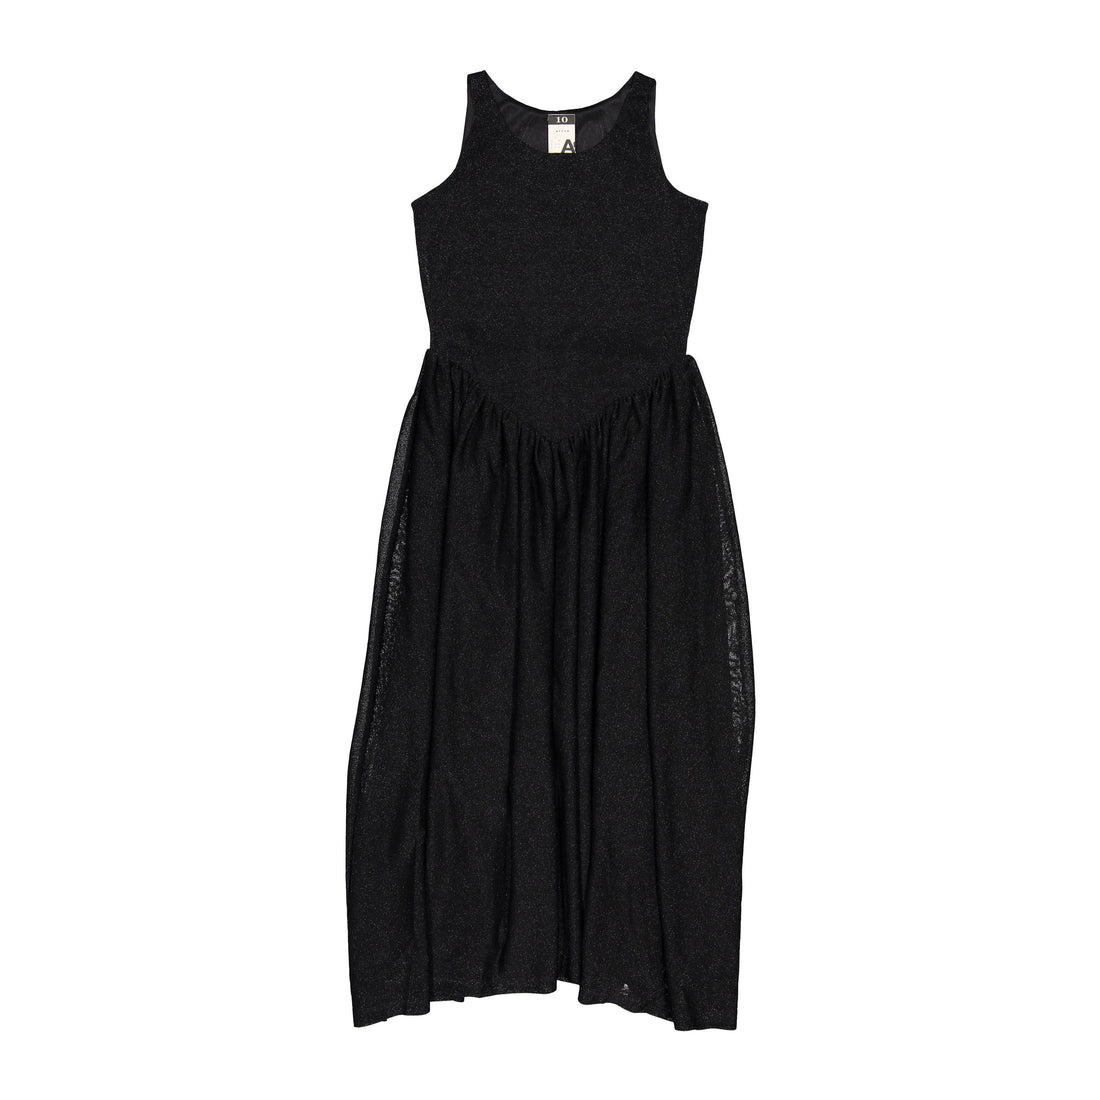 A4 Black Glitter Dropwaist Dress